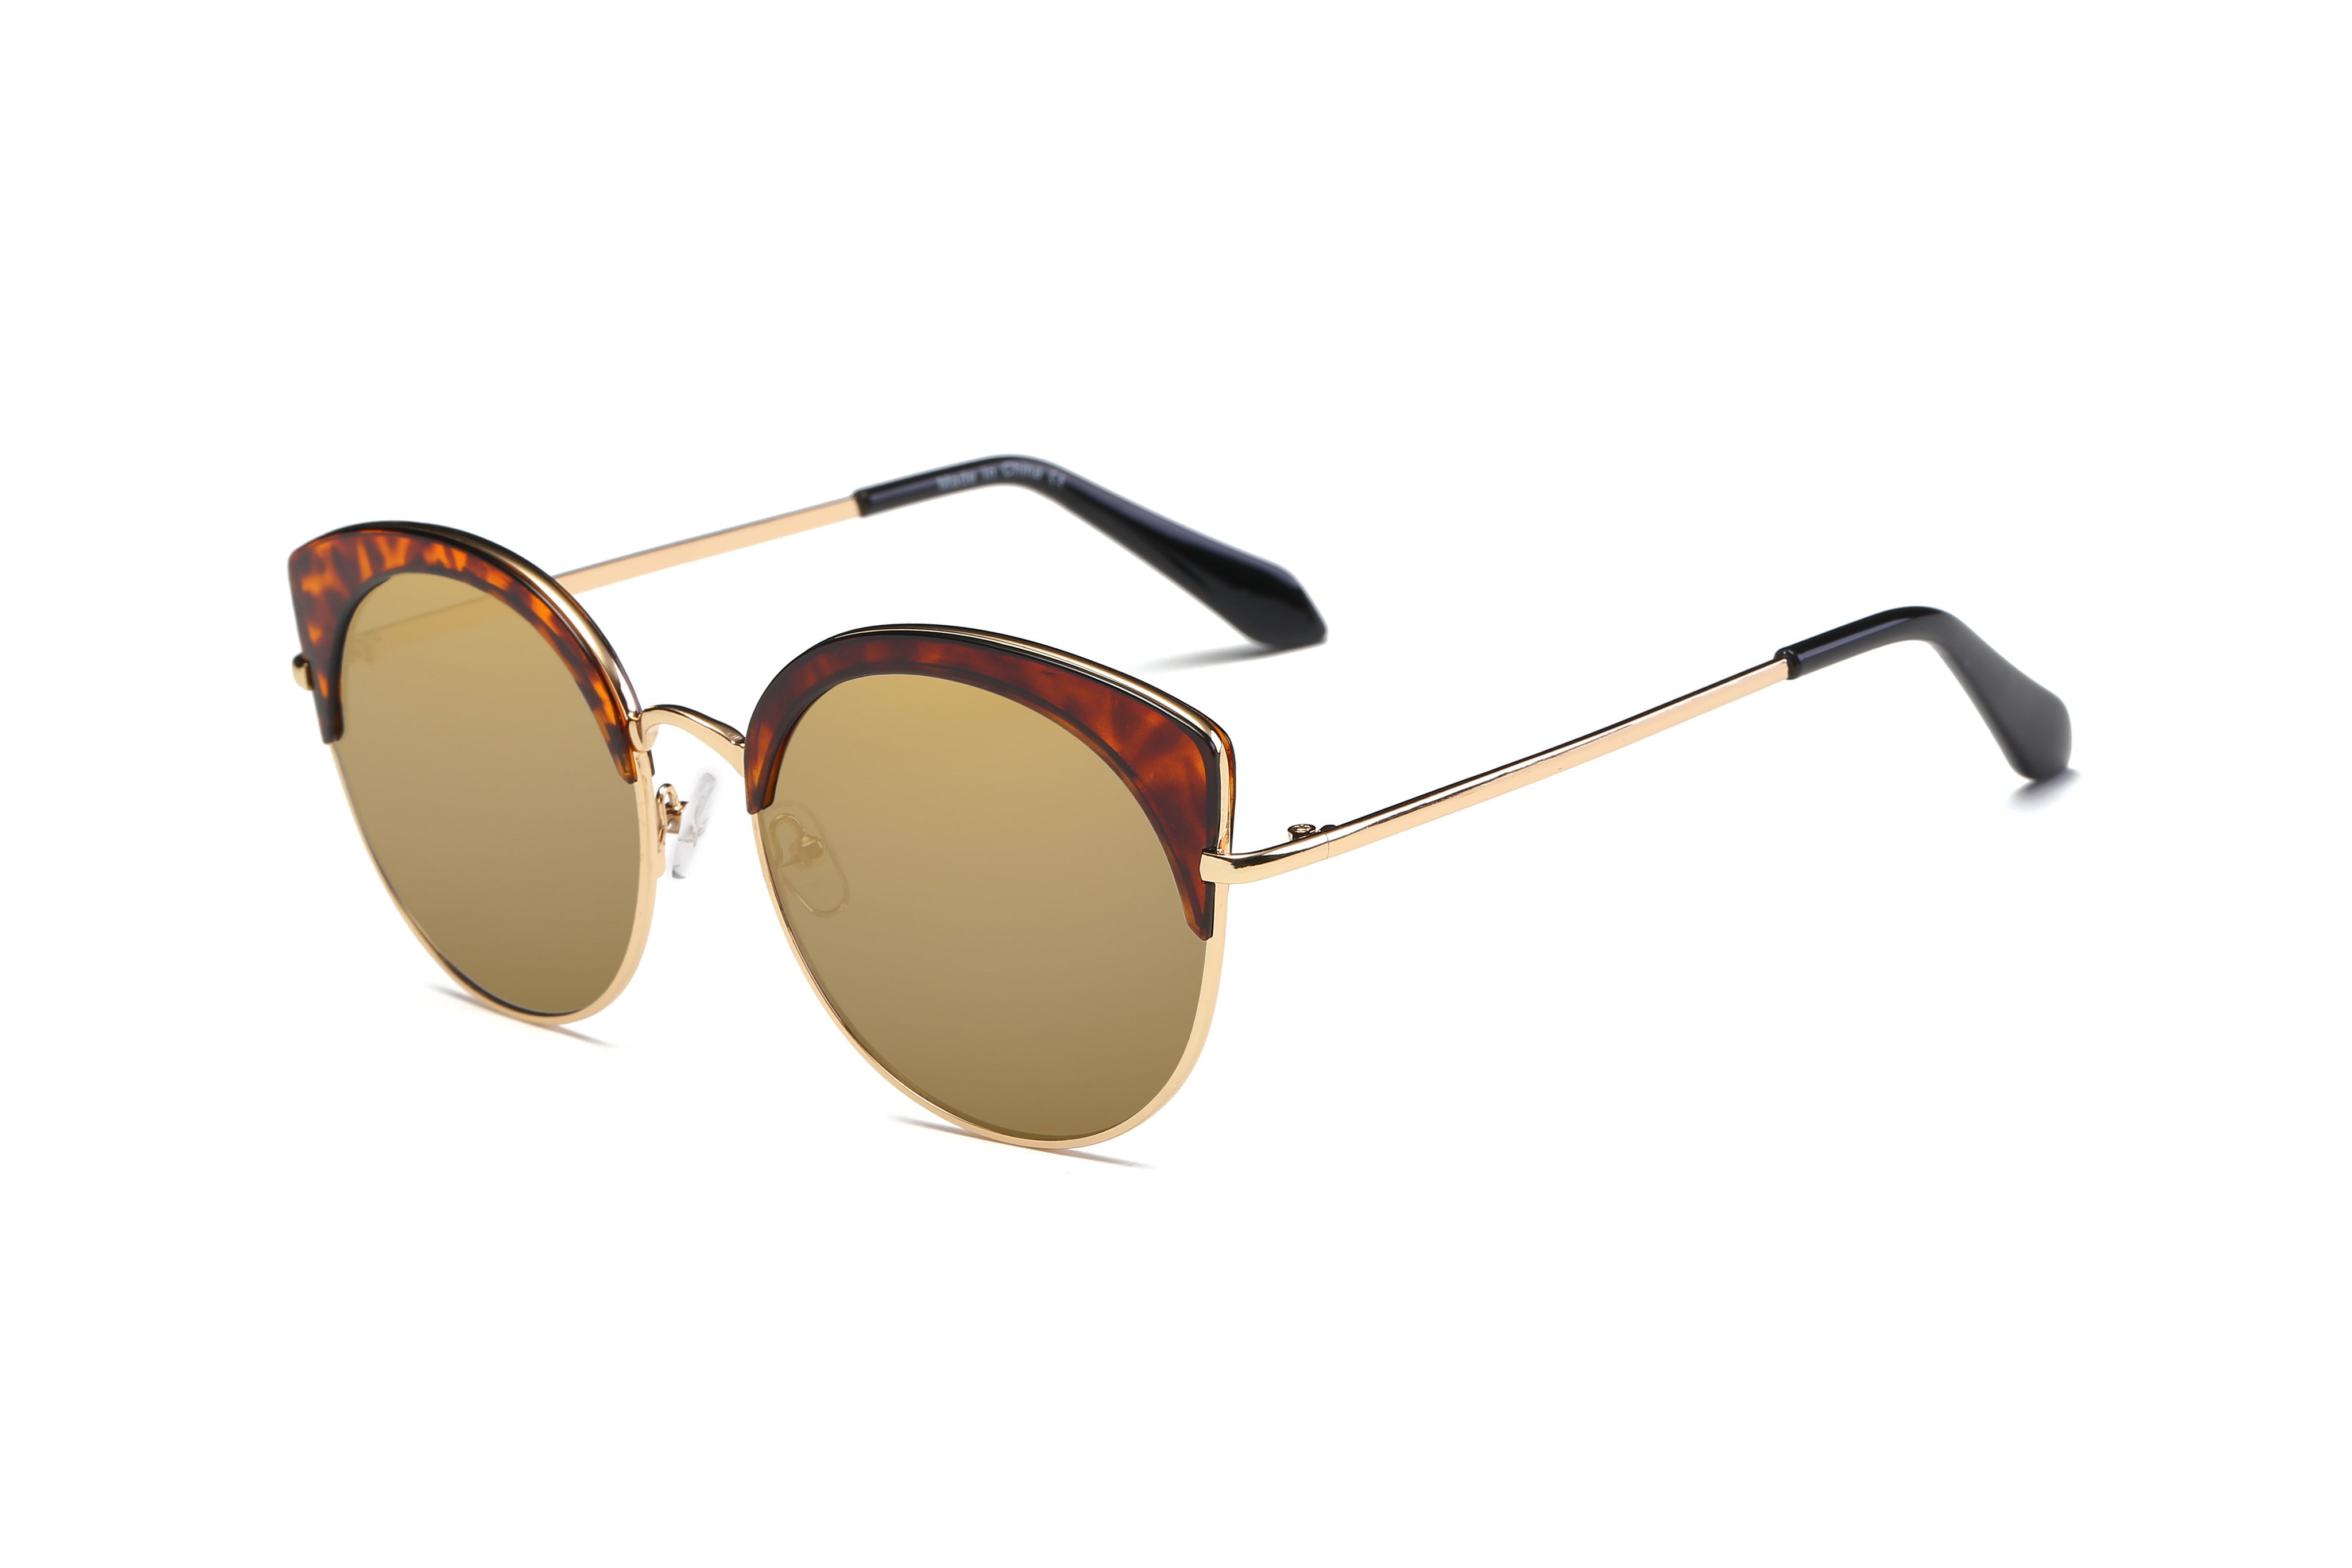 S2011 - Round Chic Half FRAME Fashion Cat Eye Women Wholesale Sunglasses Tortoise Rims - Tan Lens